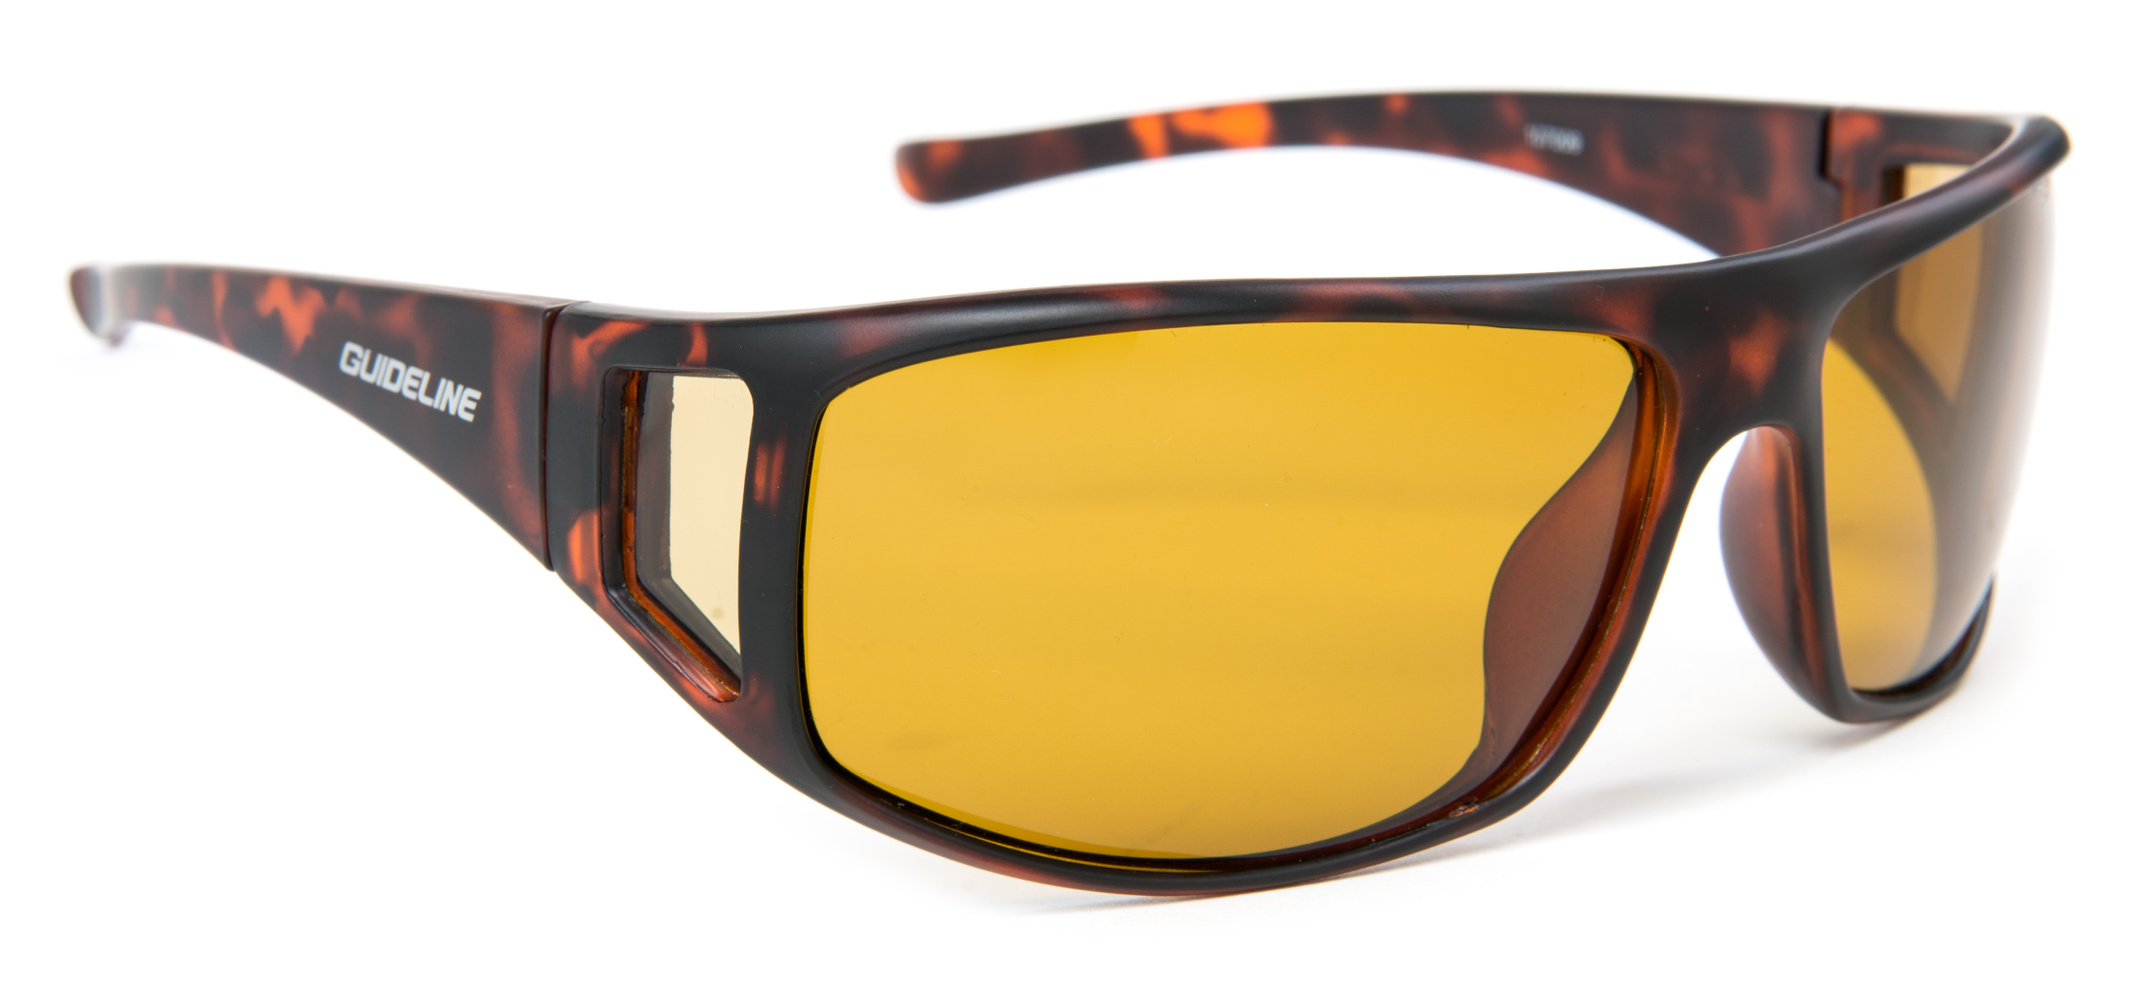 Polarized Sunglasses Guideline Ambush Sunglasses - Yellow Lens 3X Magnifier